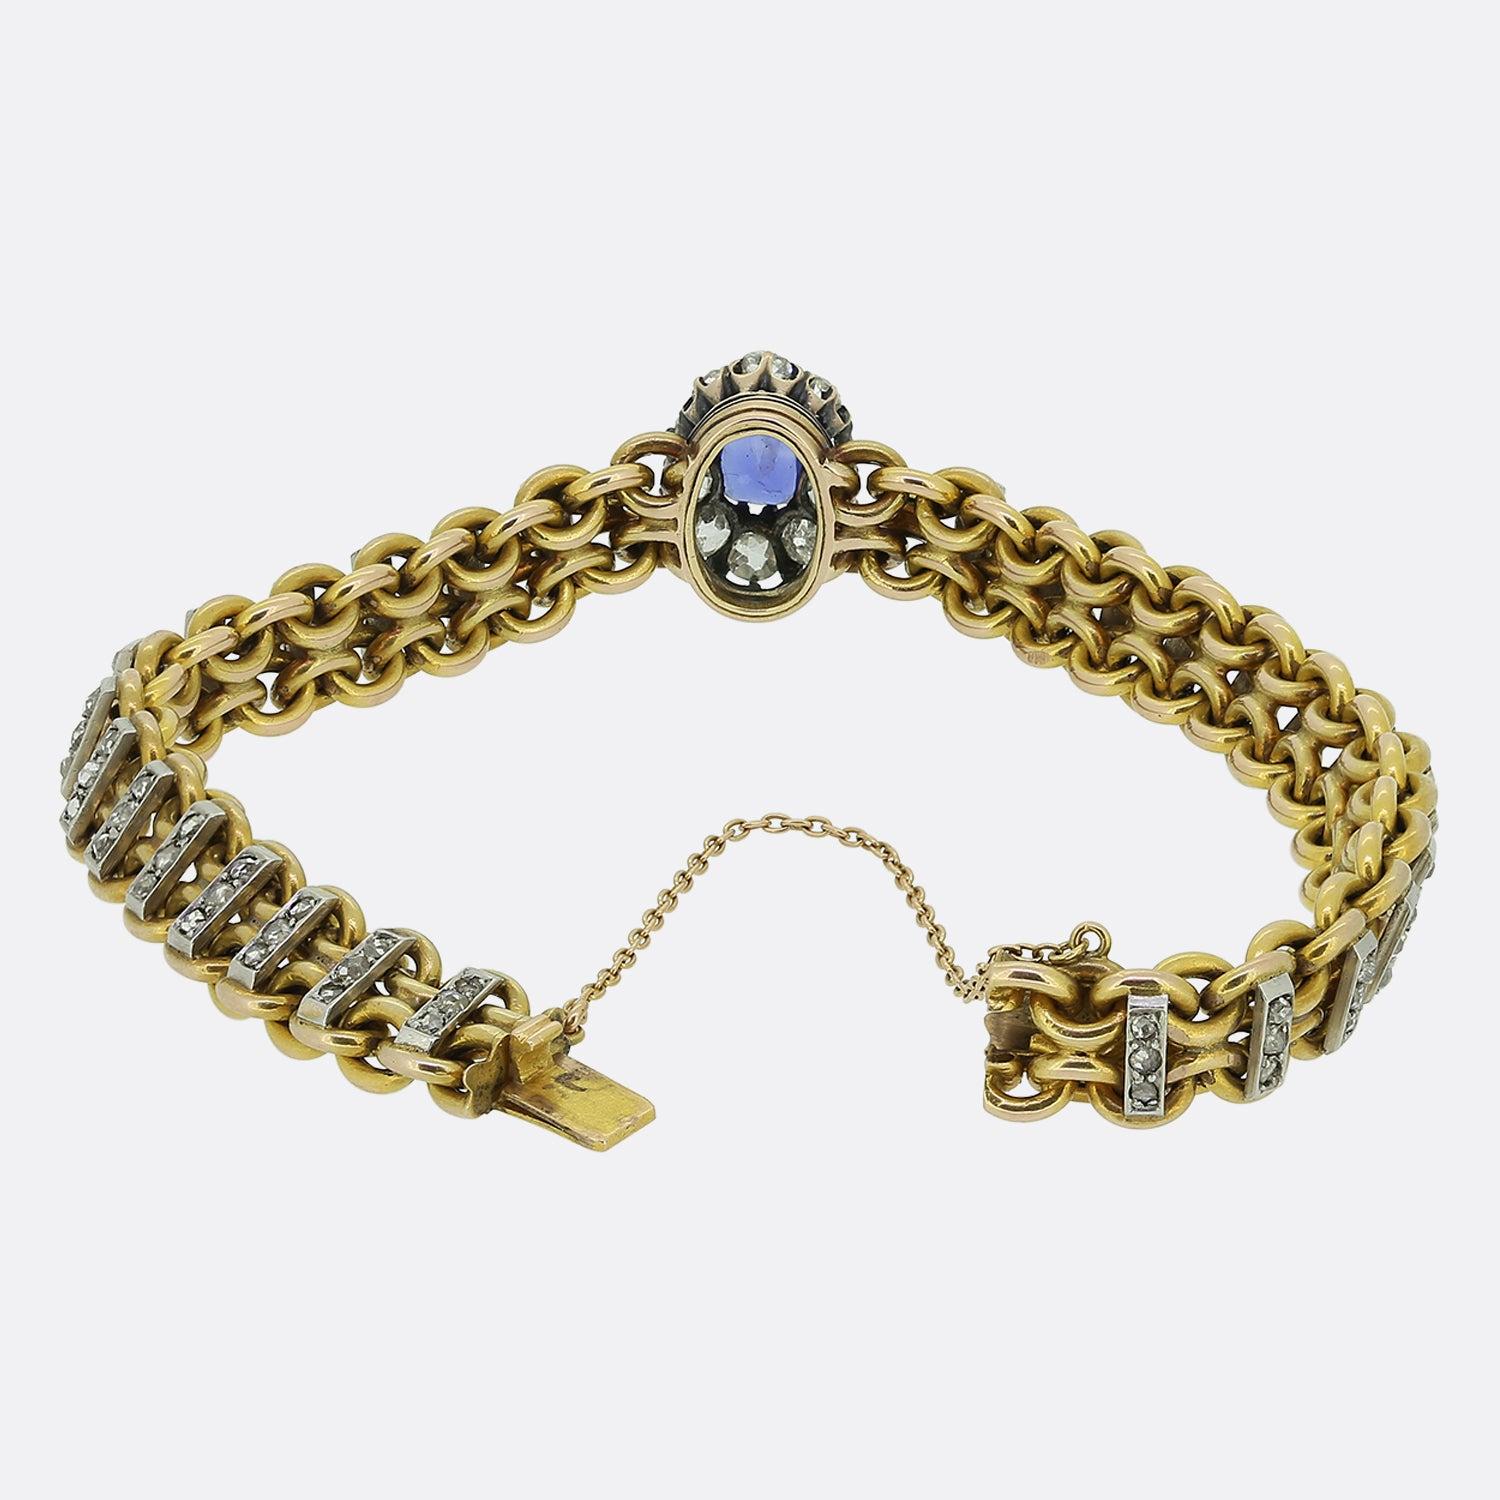 Oval Cut Victorian Sapphire and Diamond Chain Bracelet